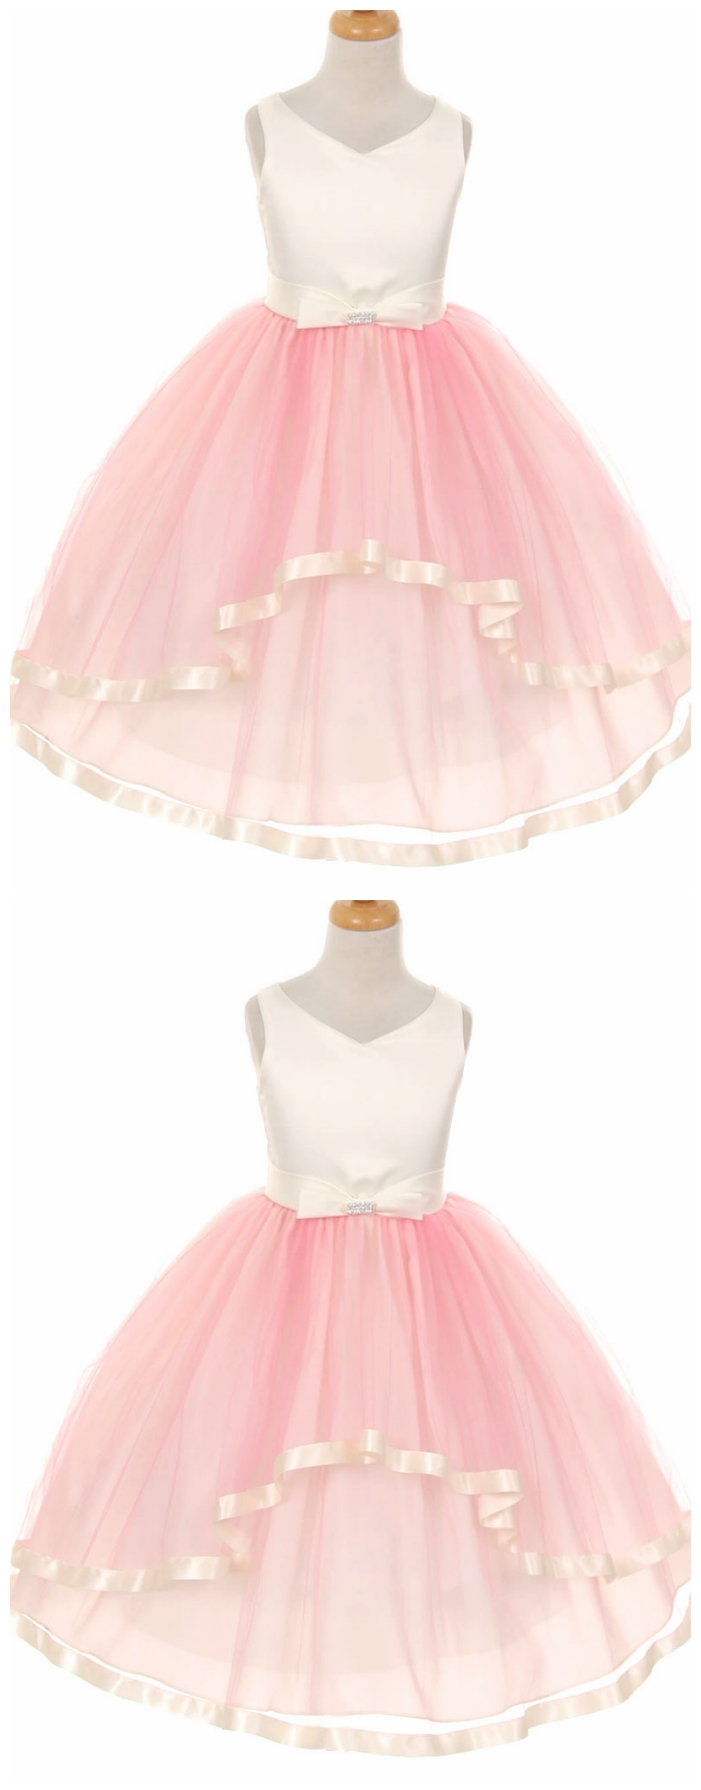 V-neck Satin Bow Layer Pink Tulle Dress